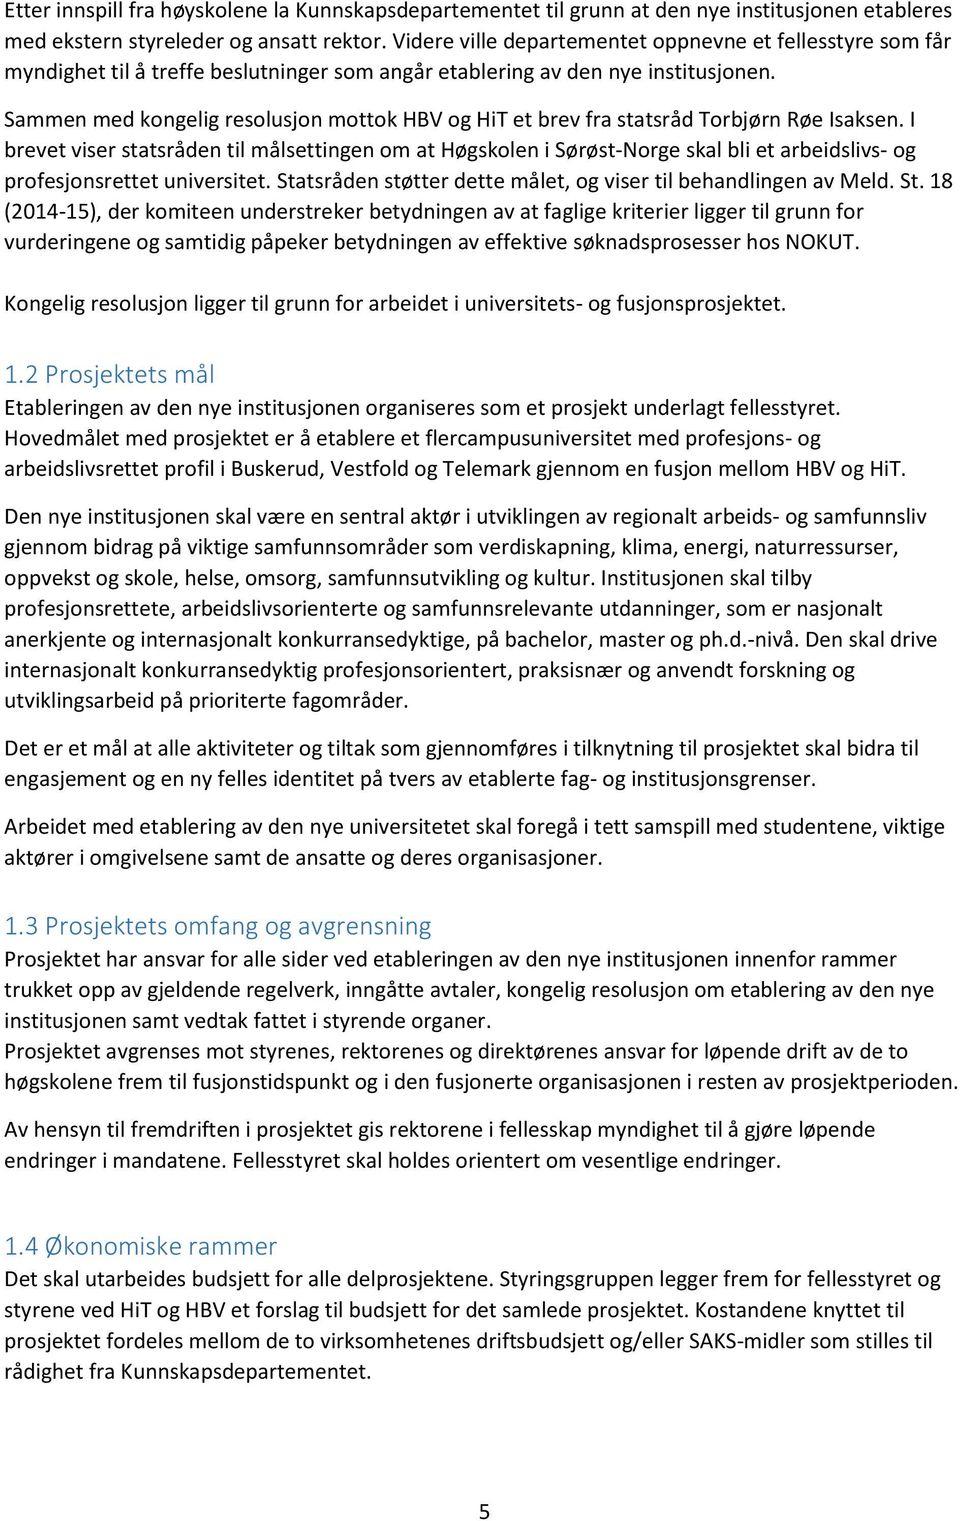 Sammen med kngelig reslusjn mttk HBV g HiT et brev fra statsråd Trbjørn Røe Isaksen.